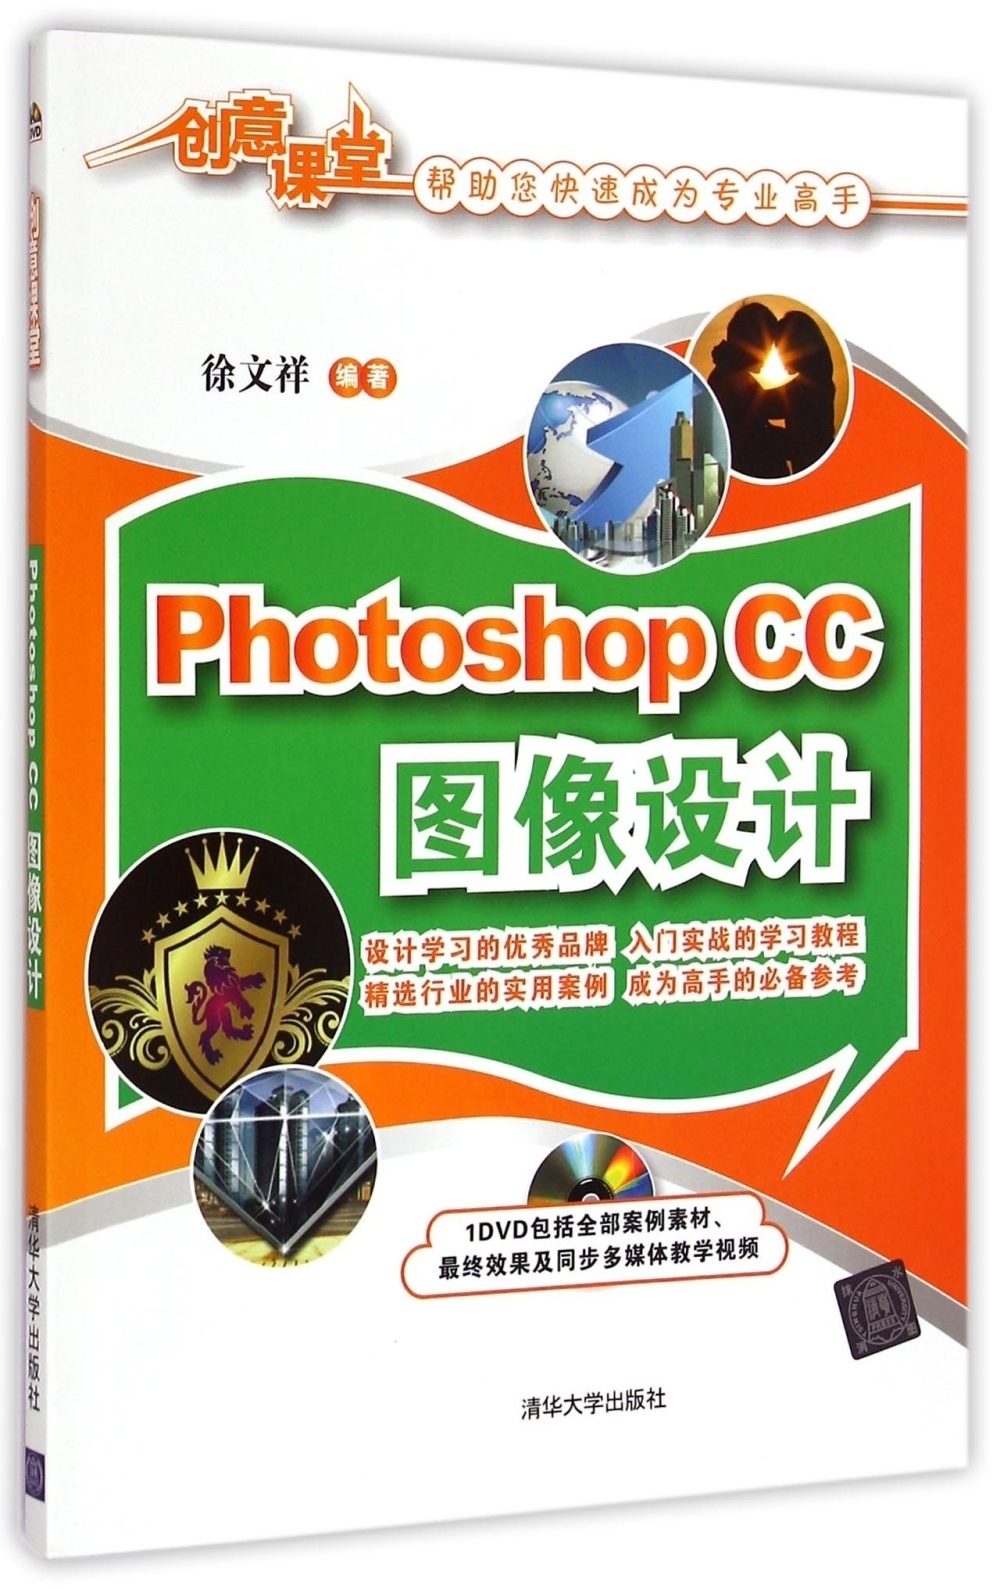 Photoshop CC圖像設計